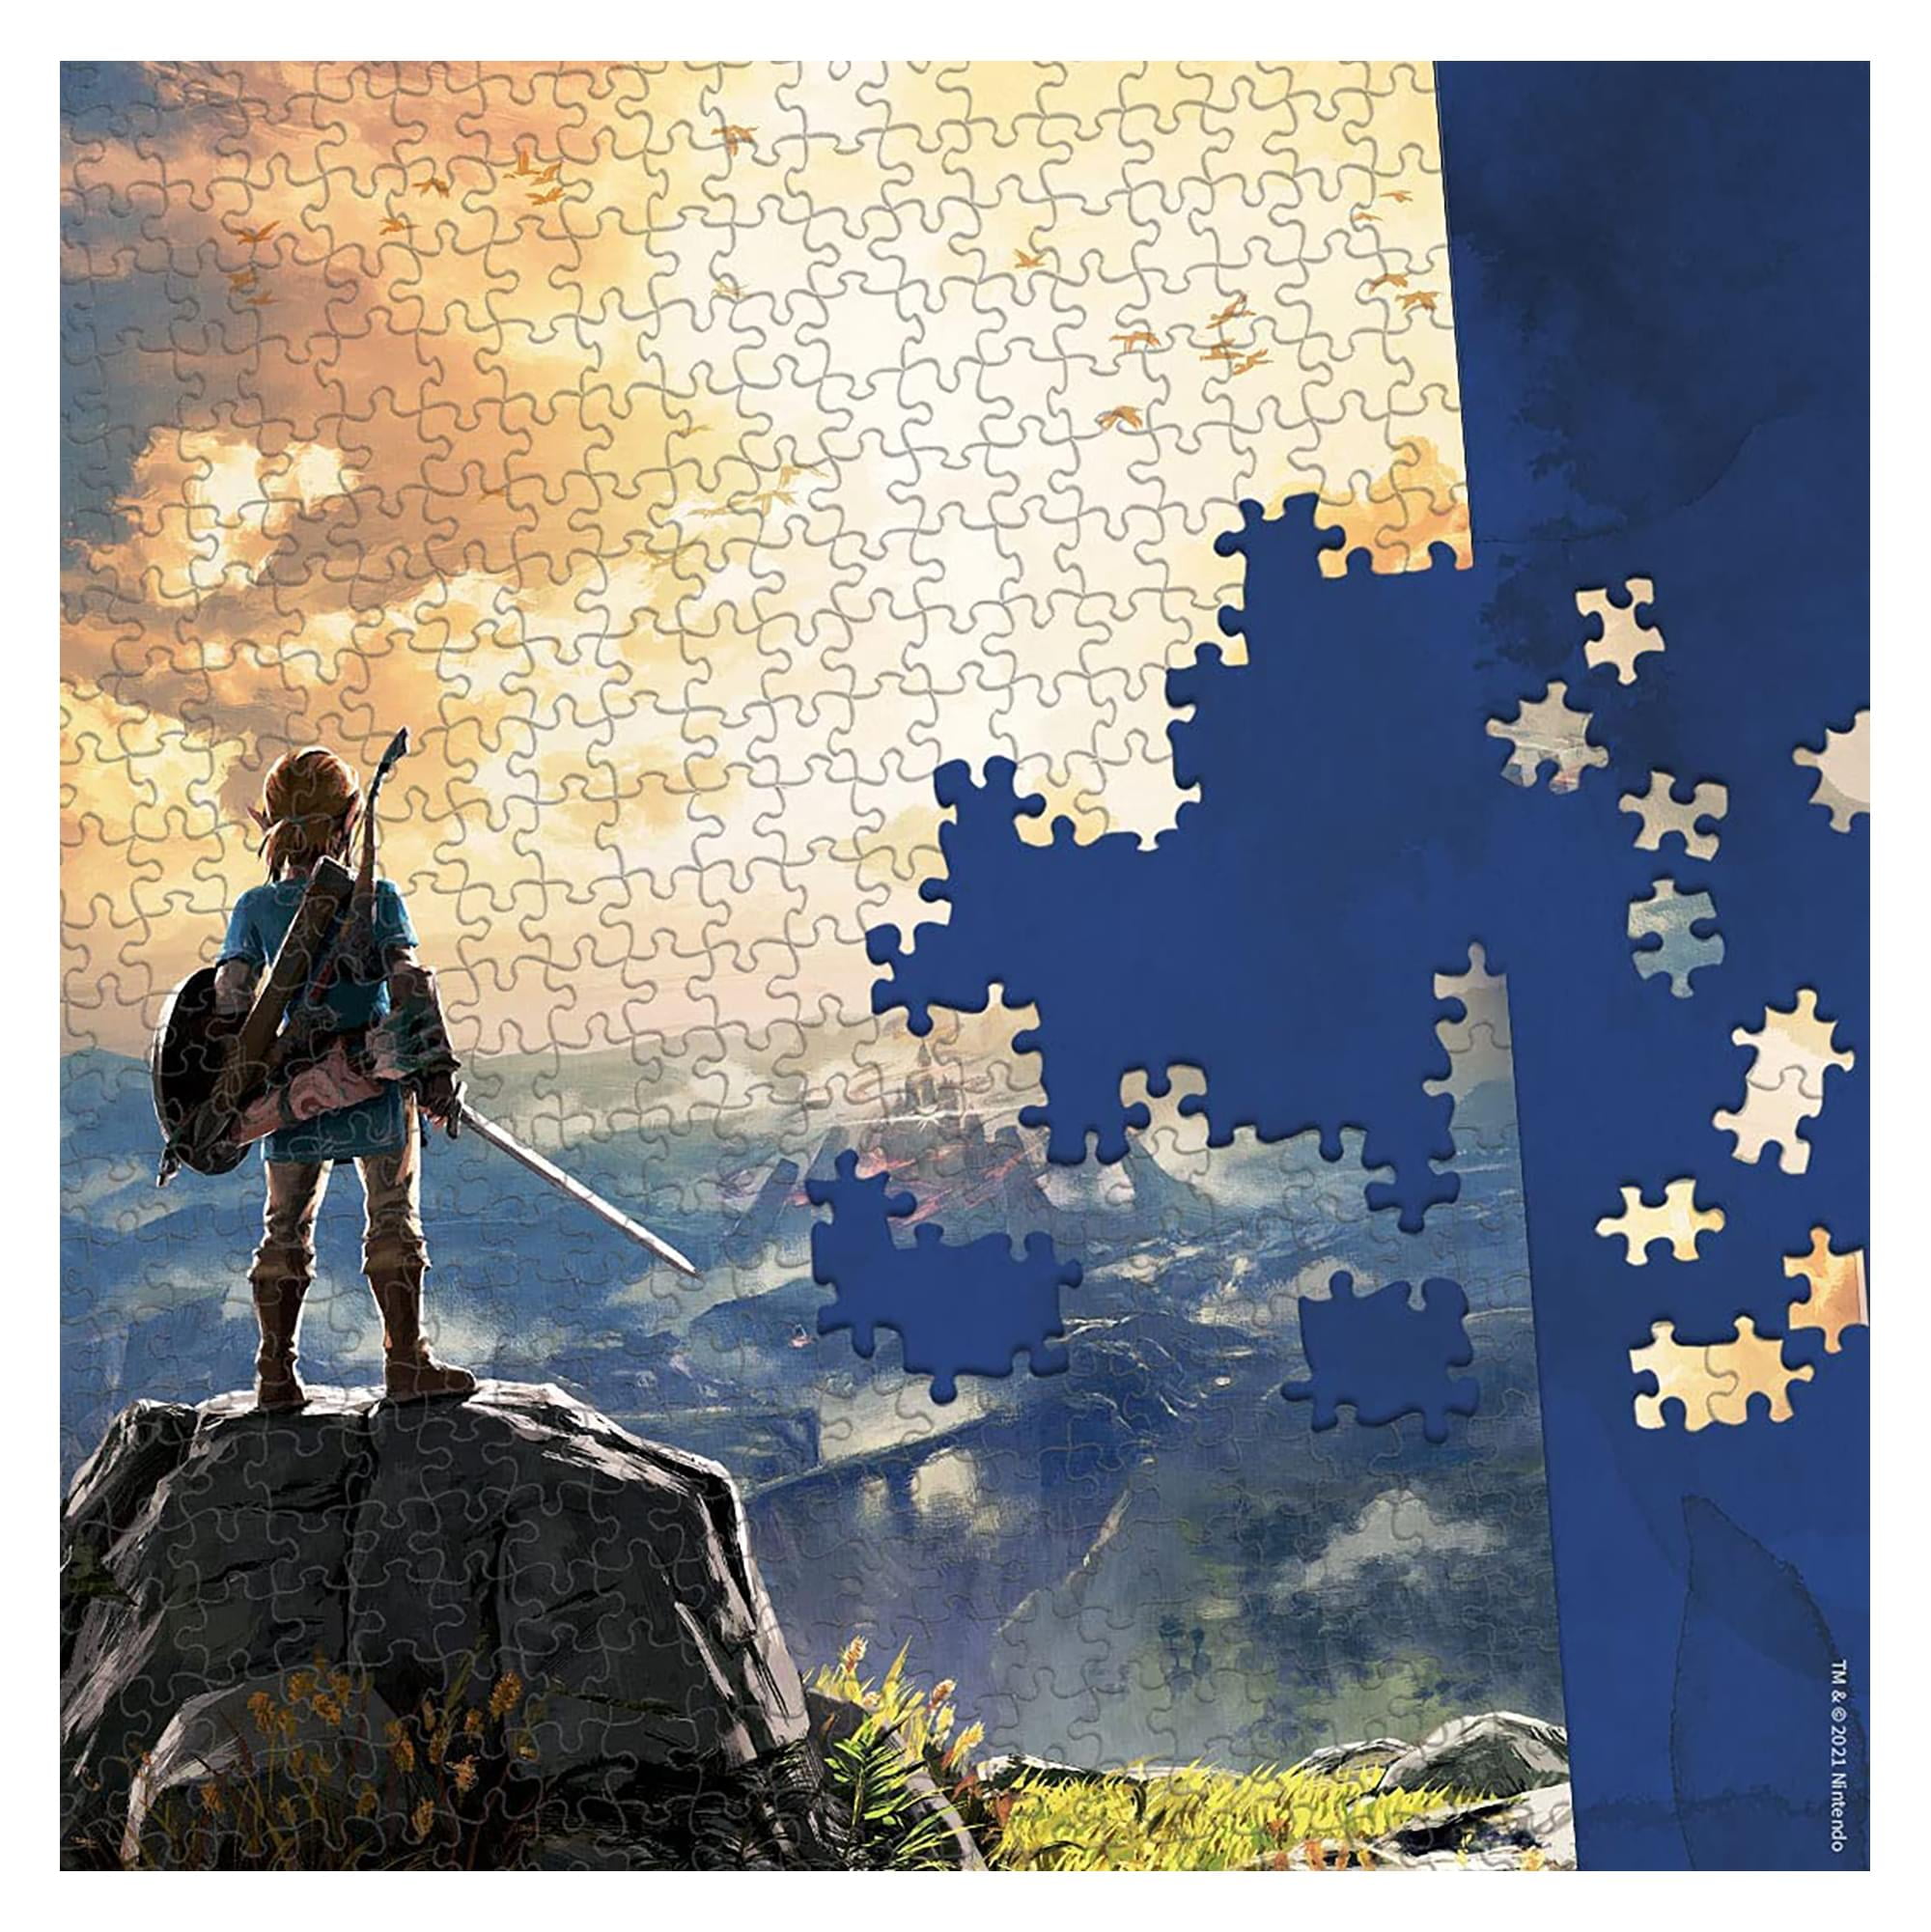 Legend of Zelda Jigsaw Puzzle 30, 110, 252, 500,1000-piece Tears